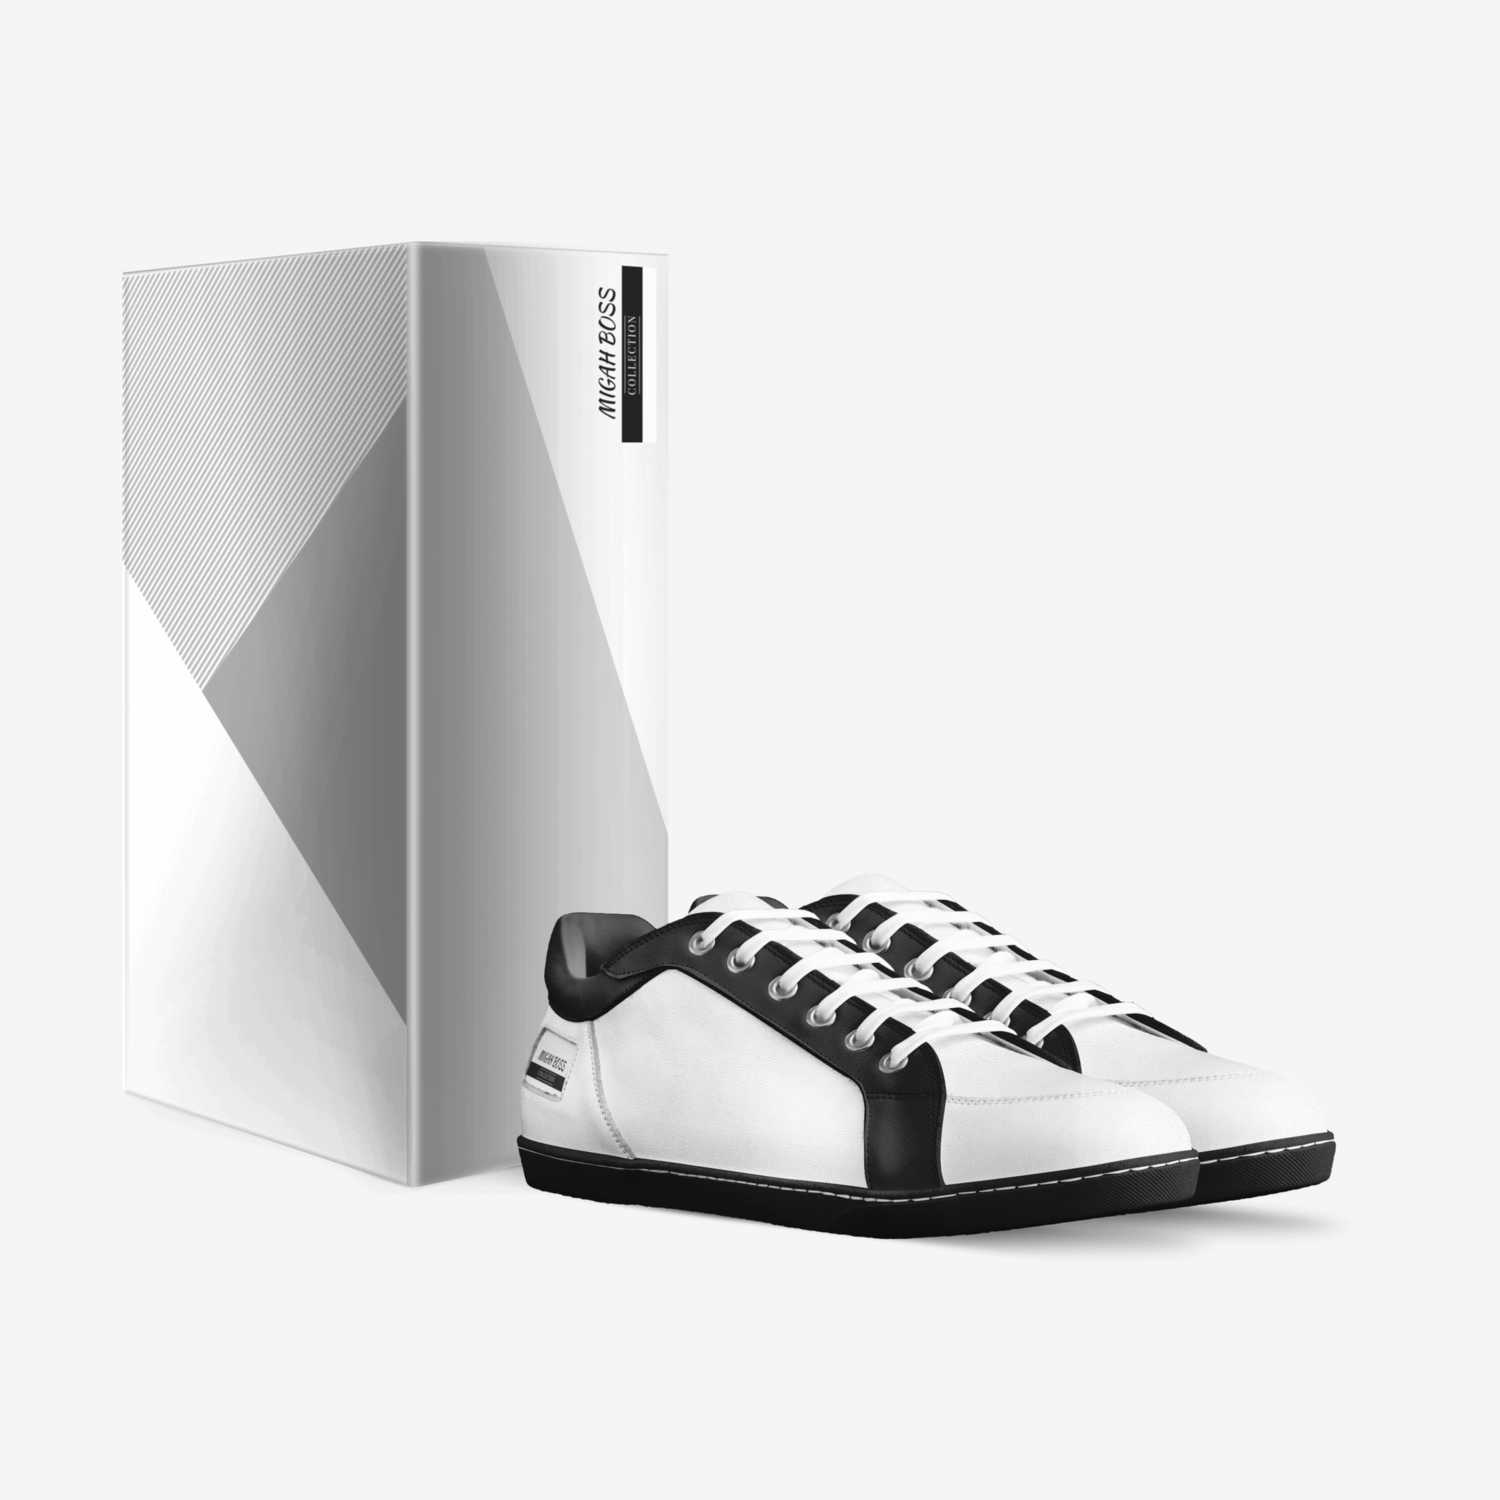 VVOSS custom made in Italy shoes by Vugah Munang | Box view